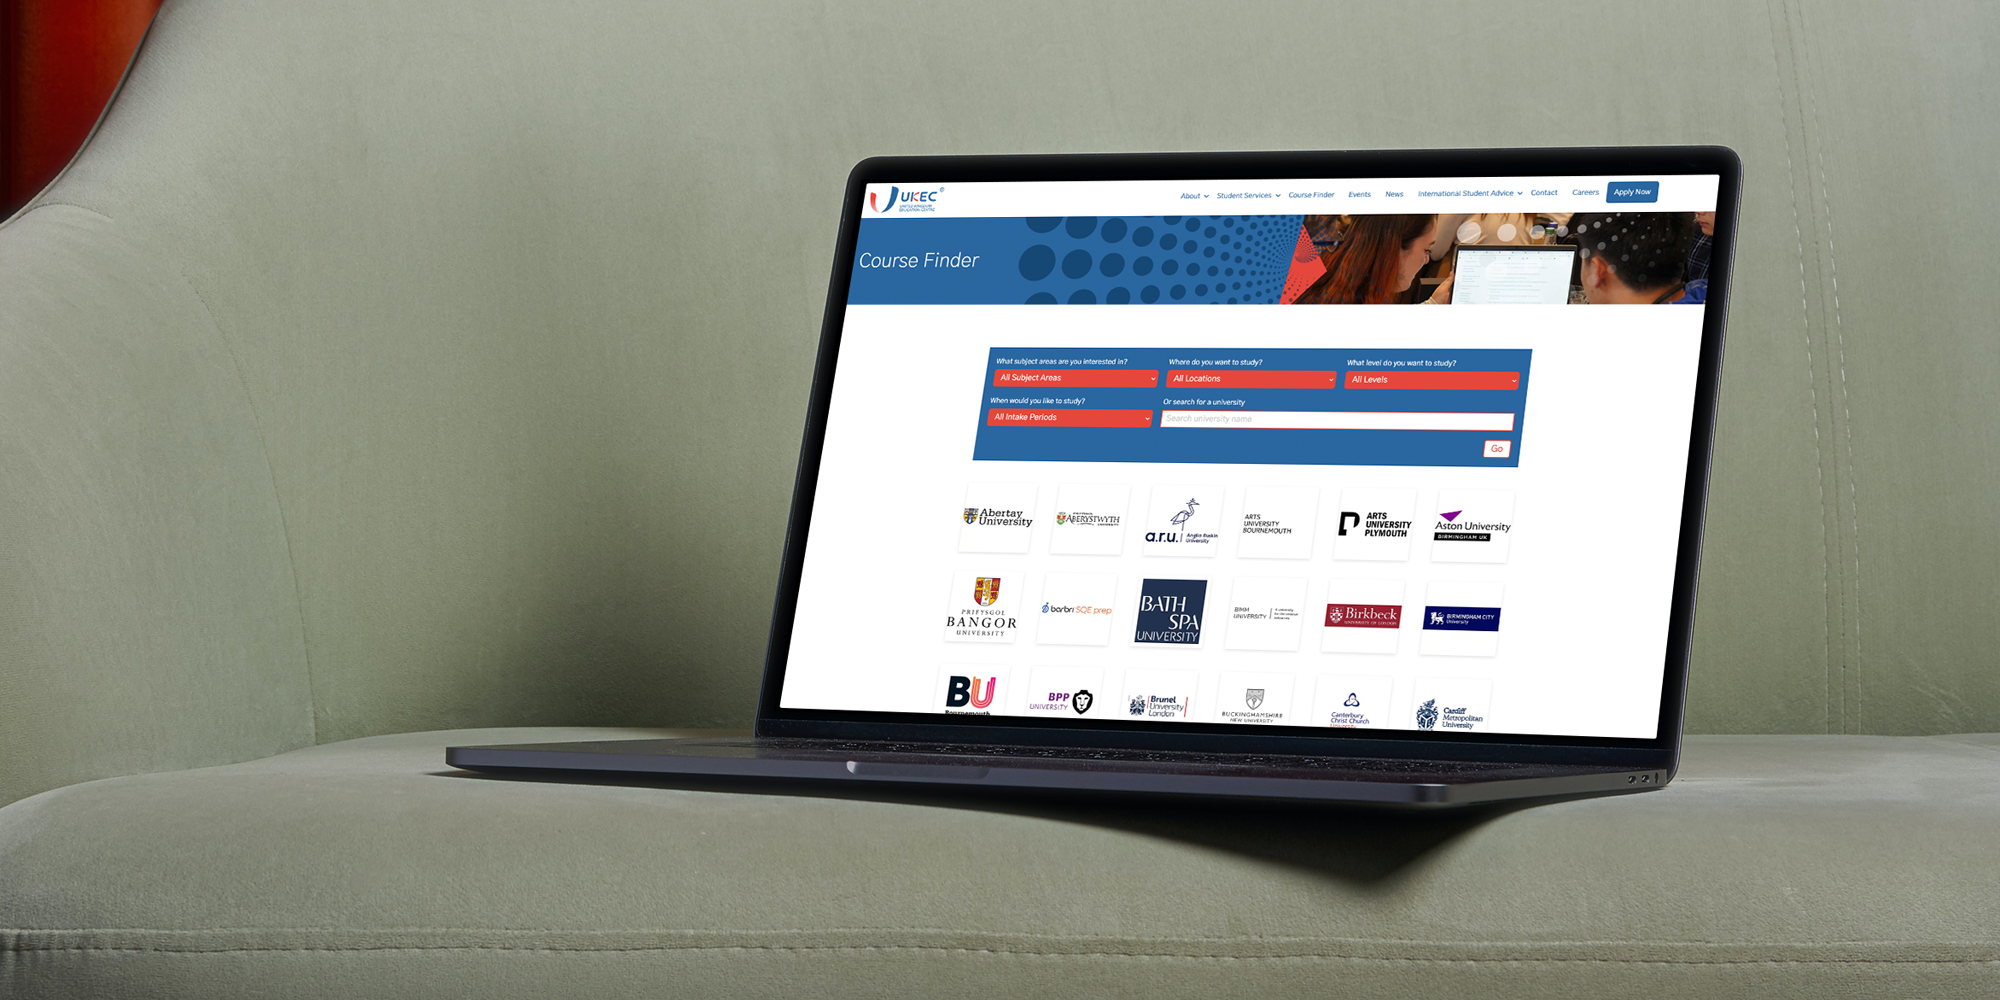 UKEC page shown on a laptop